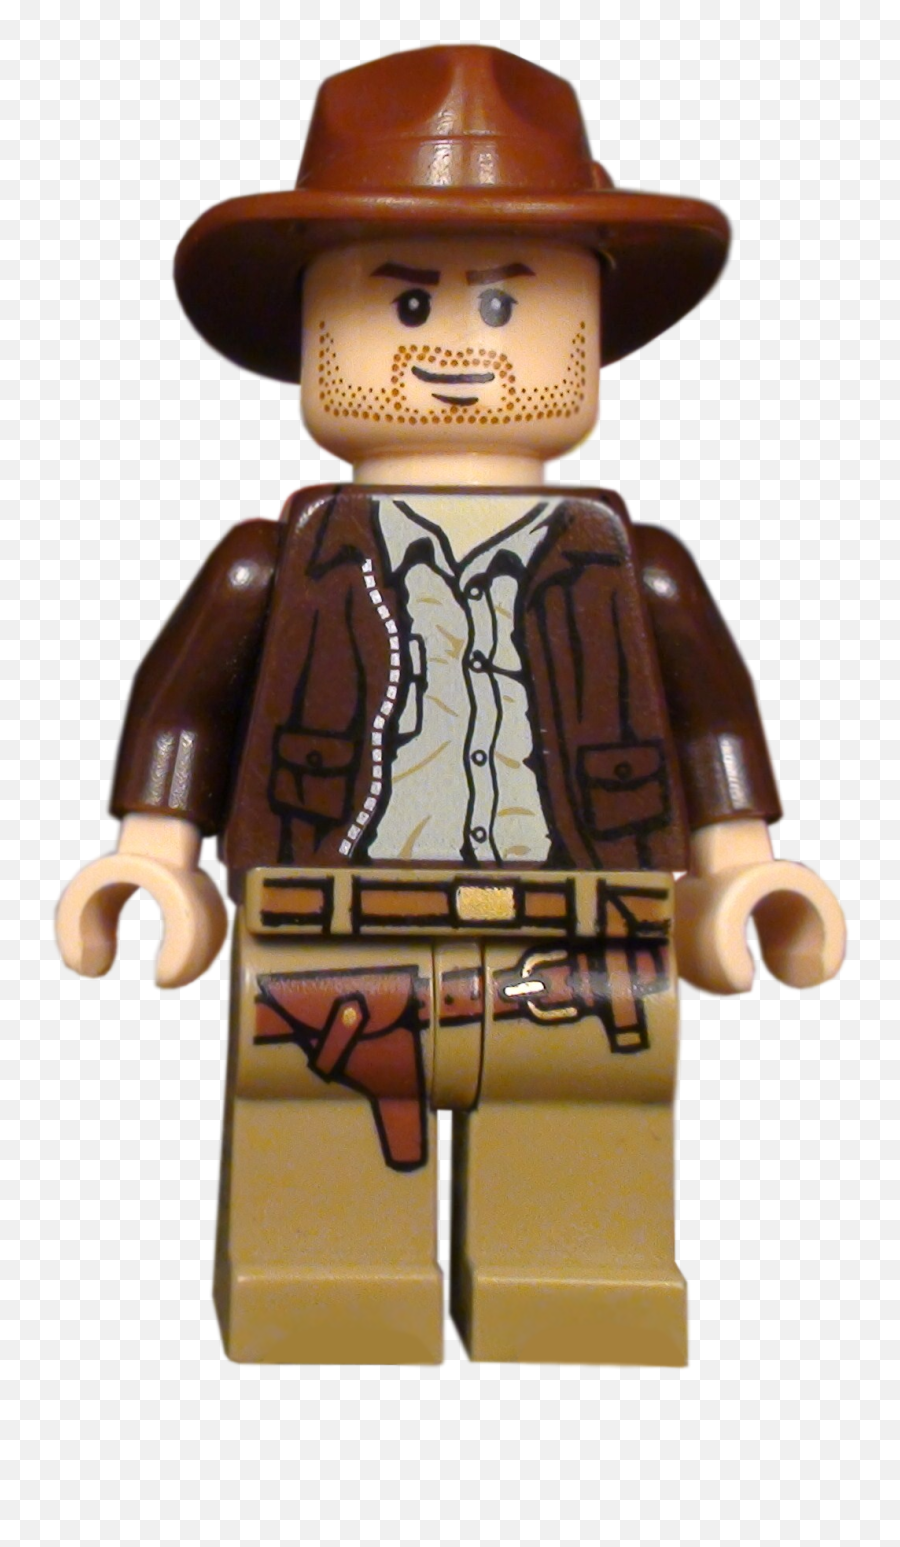 Indiana Jones Lego Man Png Image - Minifigure Lego Indiana Jones,Lego Man Png